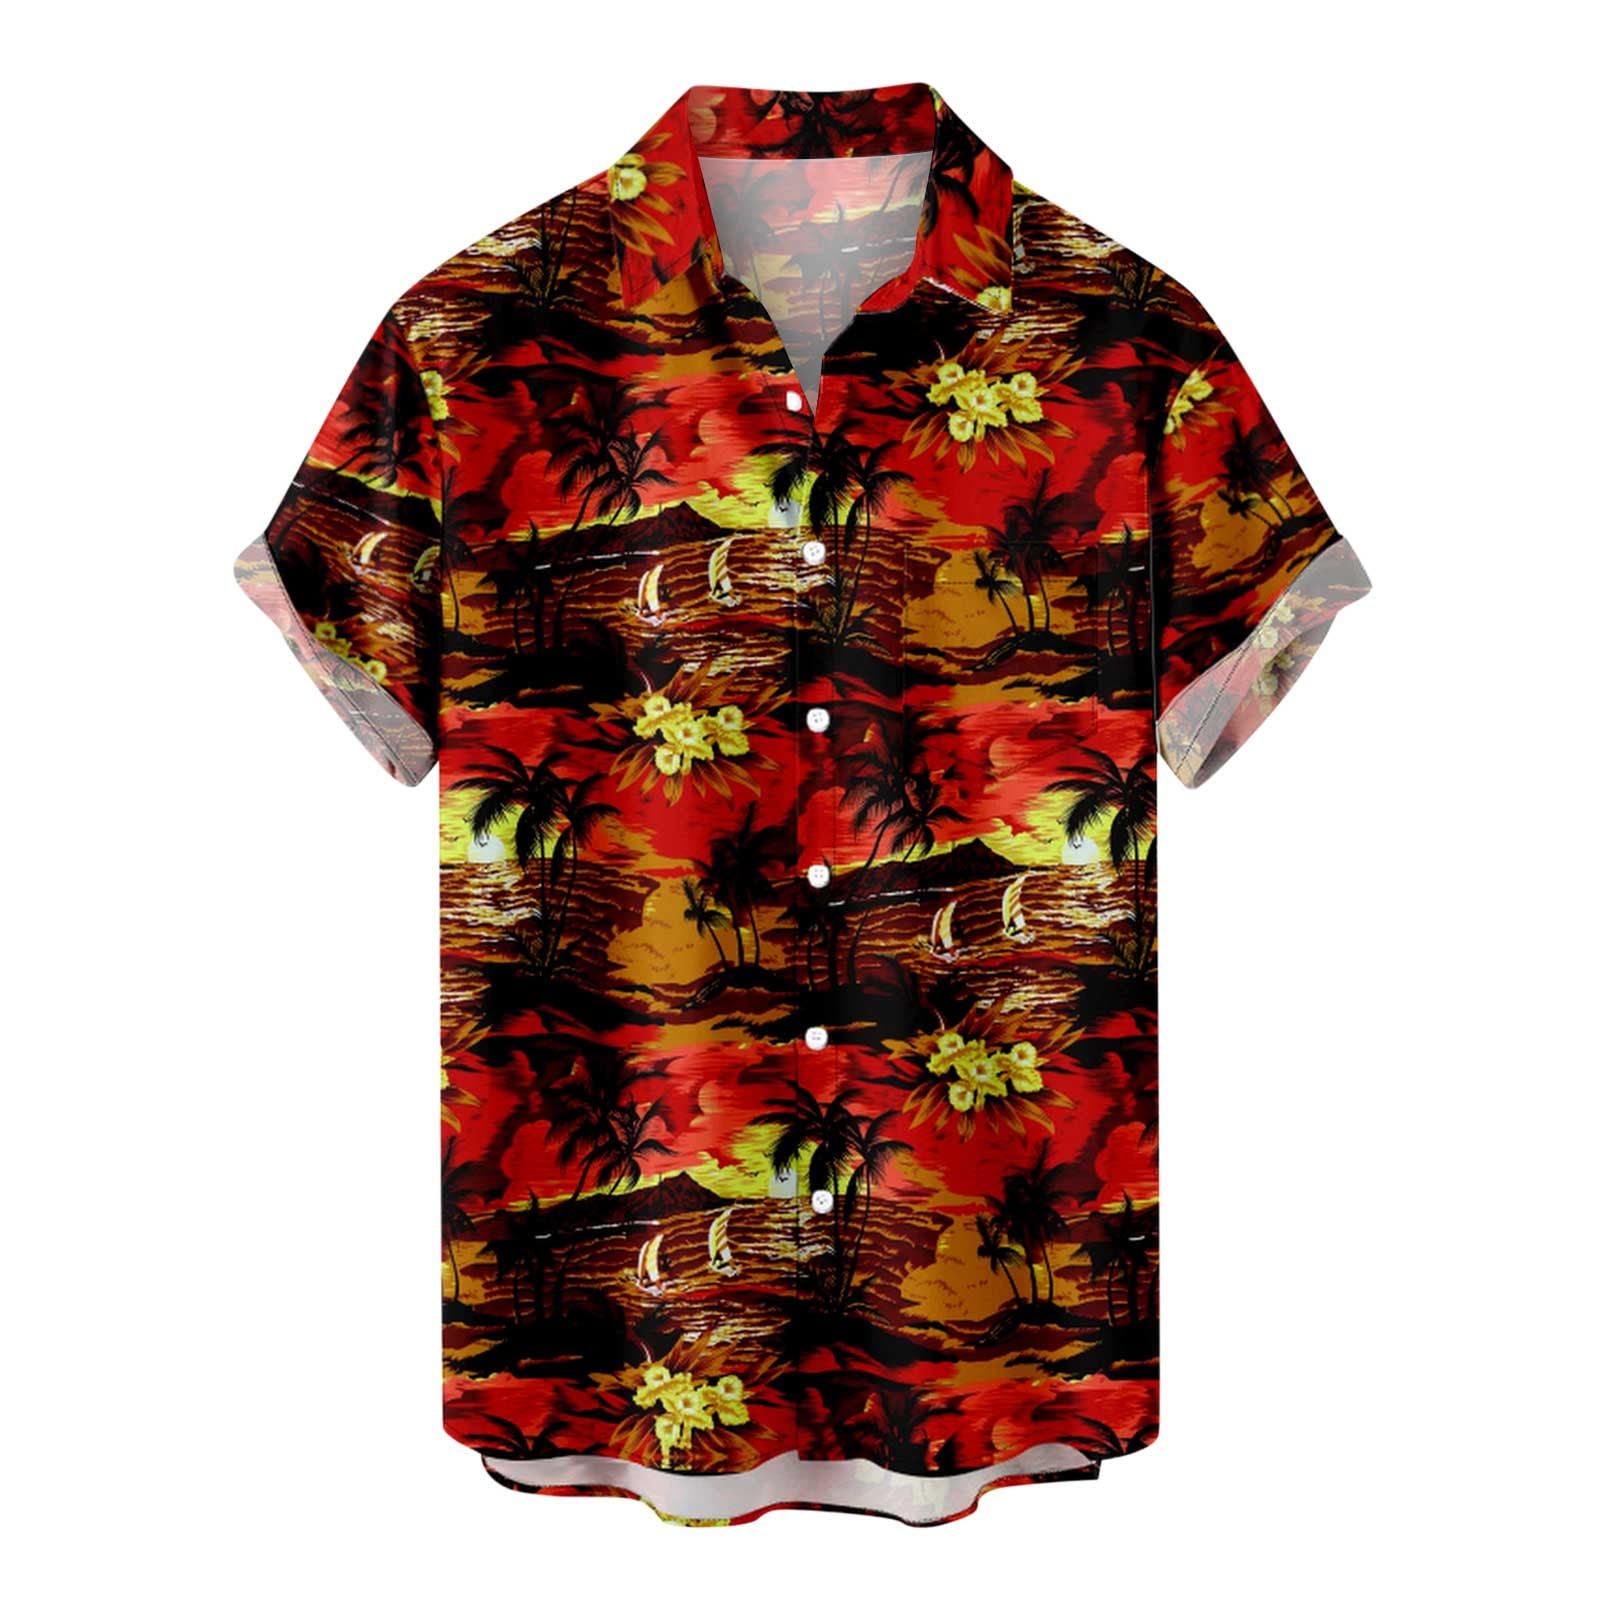 ZCFZJW Casual Button Down Hawaiian Shirts for Men Summer Short